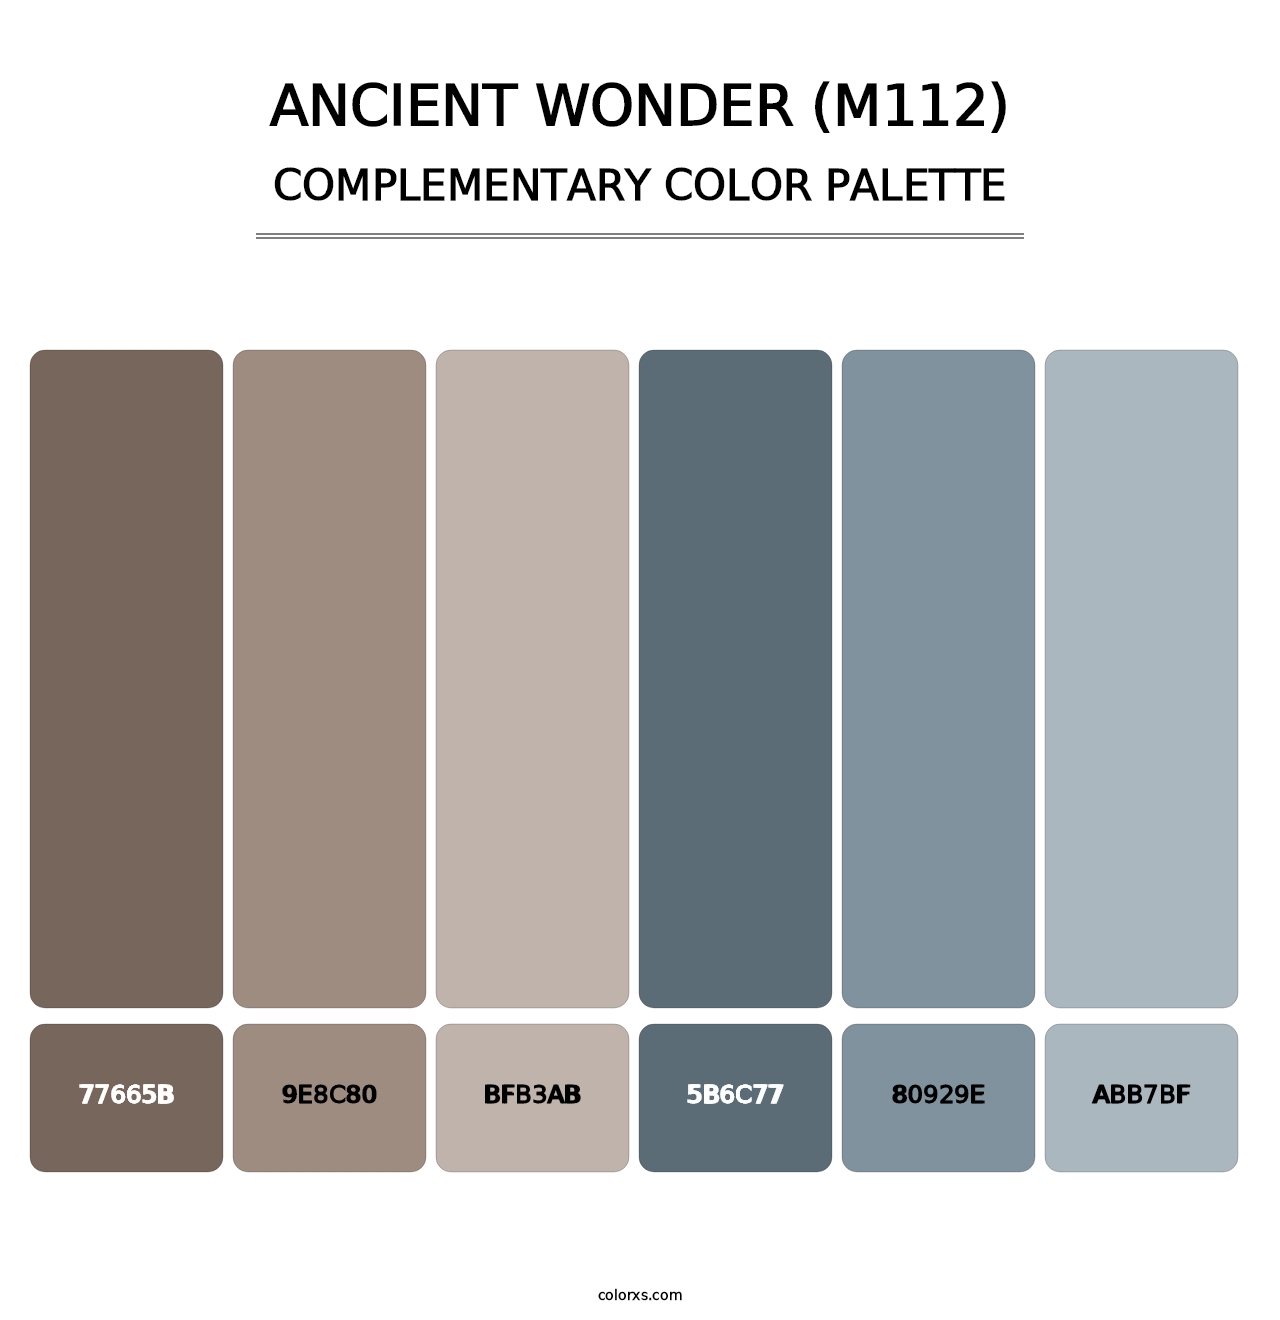 Ancient Wonder (M112) - Complementary Color Palette